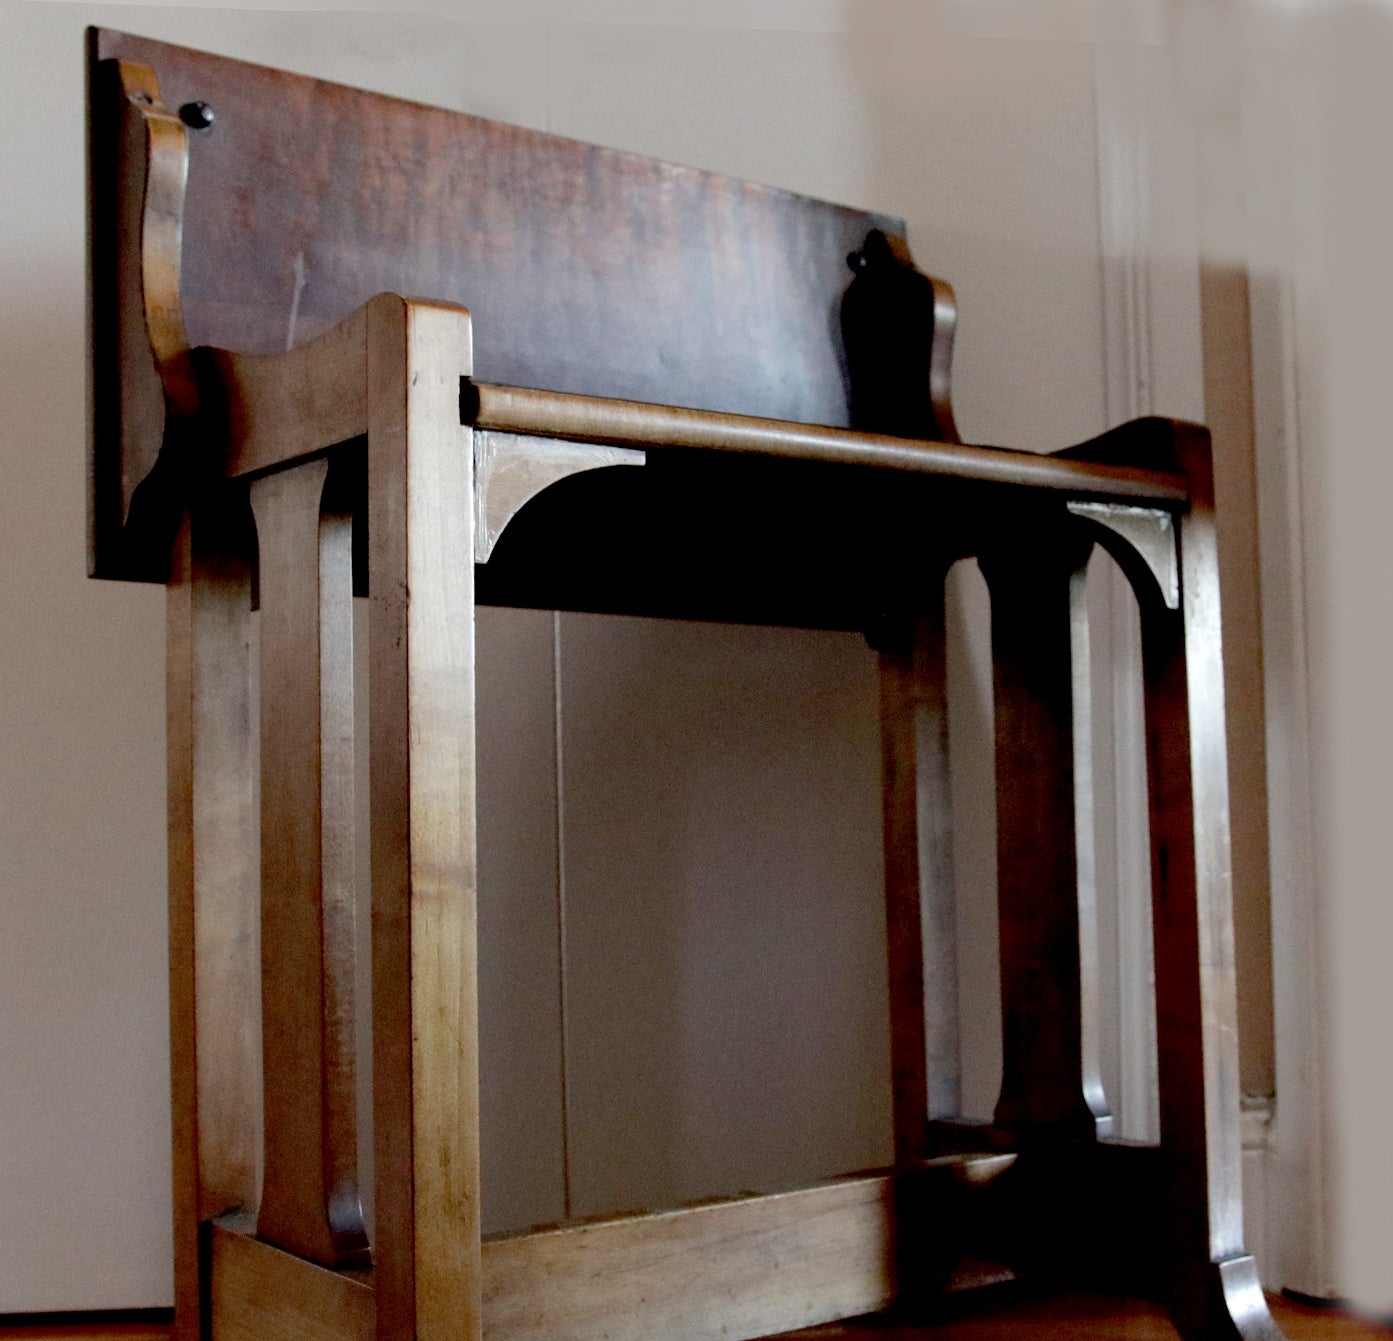 Rare 19th Century Folding Pew, Altar, Desk from Regency Period, England or U.S.